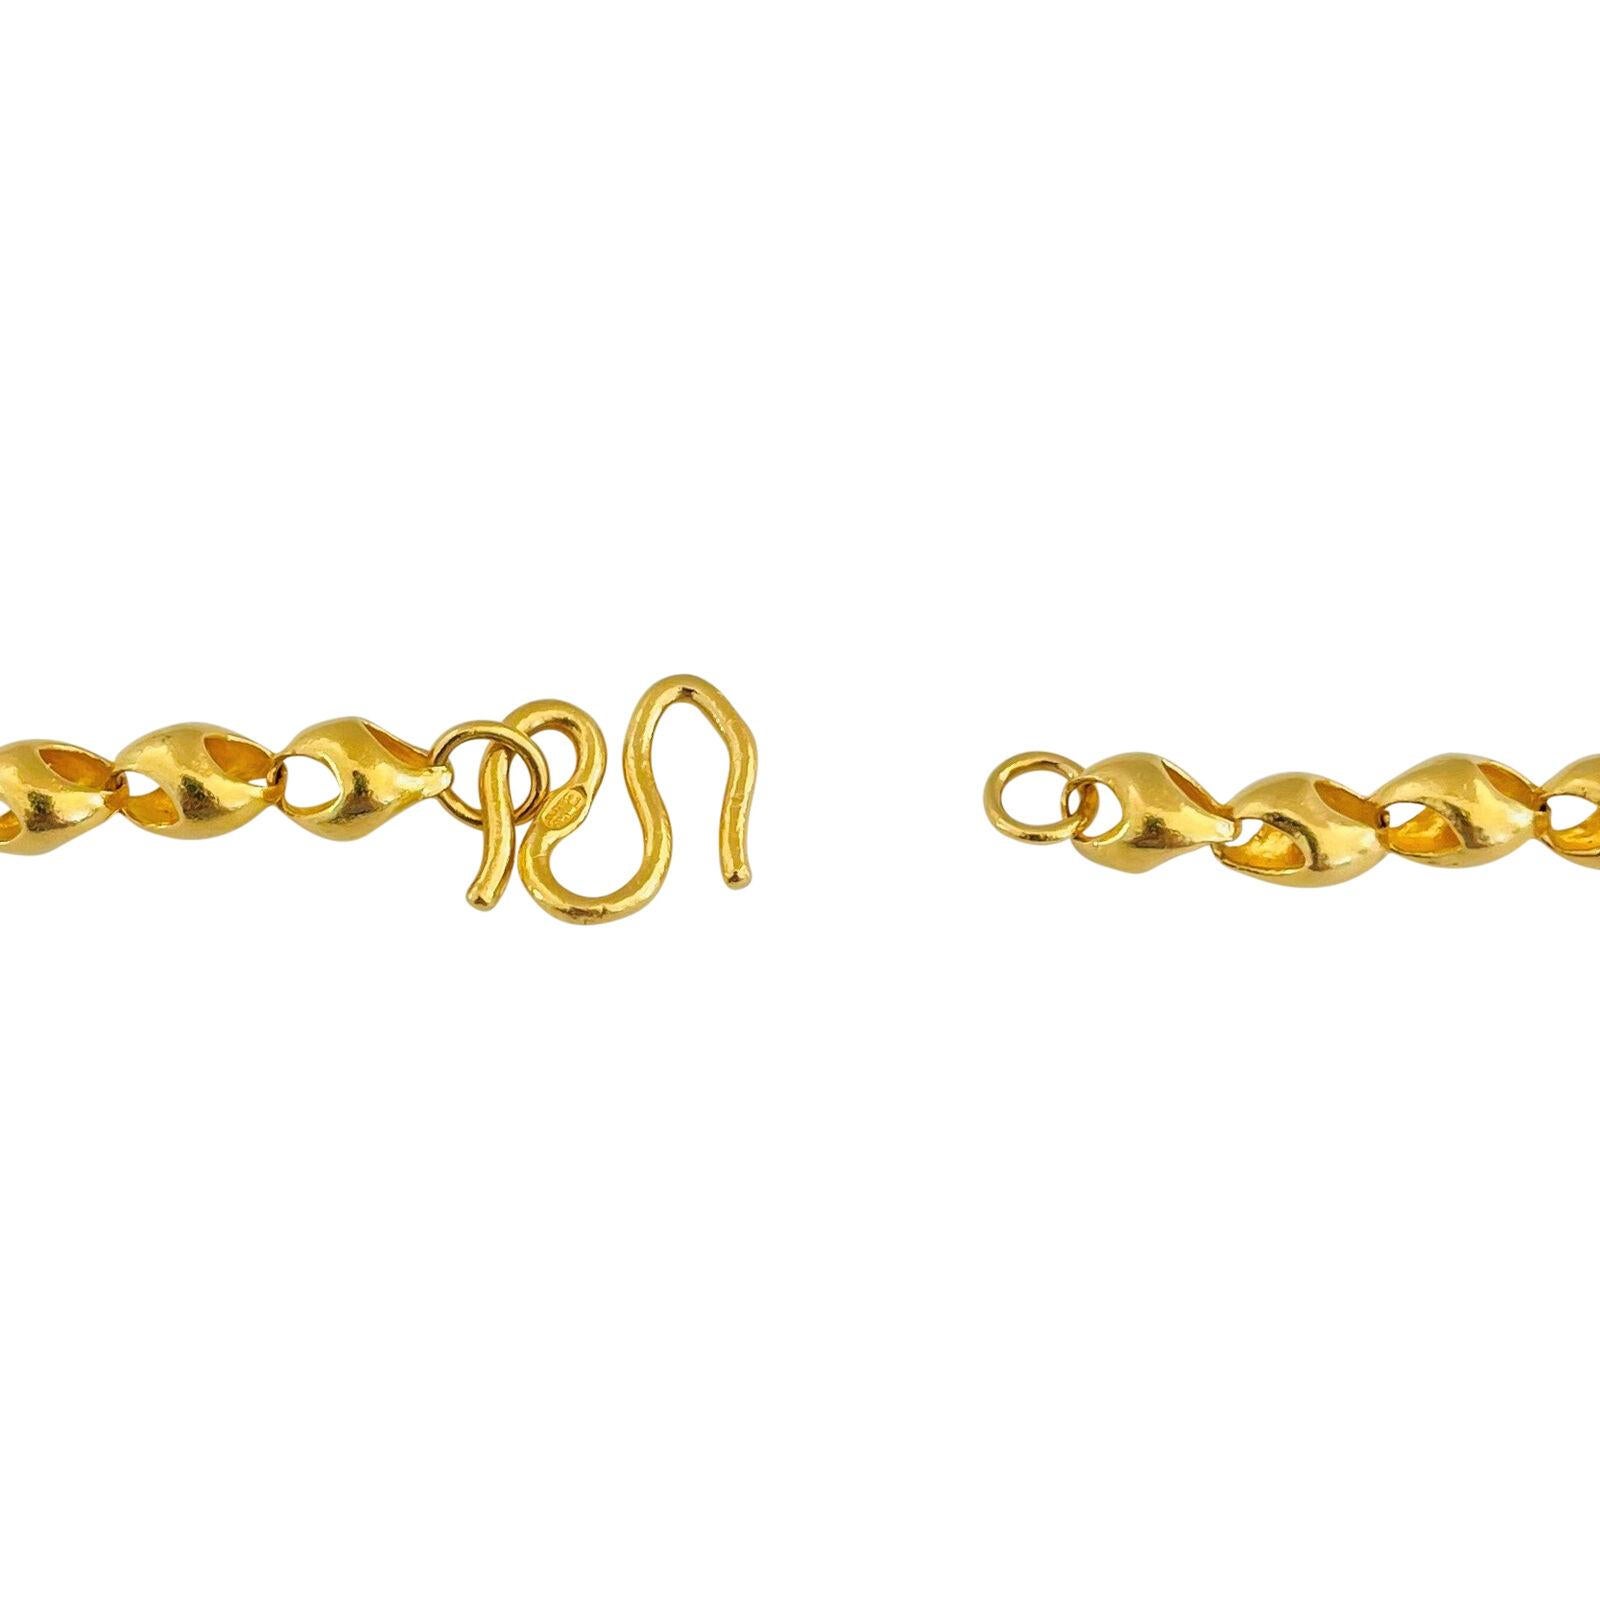 Women's or Men's 24 Karat Pure Yellow Gold Solid Heavy Fancy Link Chain Necklace